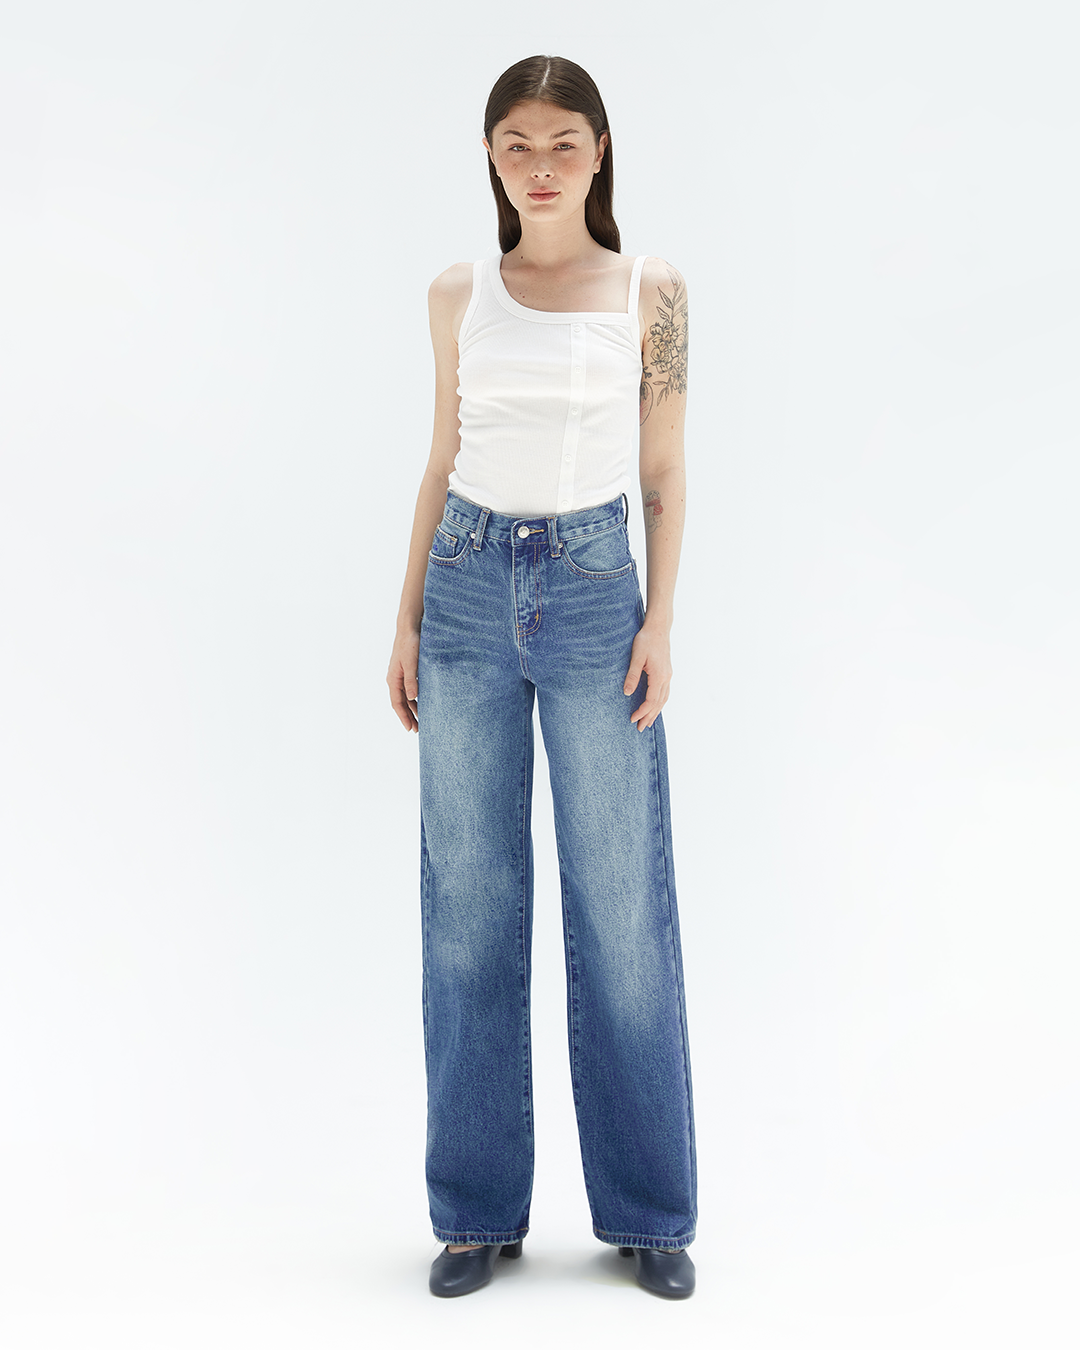 TheBlueTshirt - Quần Jeans Nữ Màu Xanh - Straight A Jeans - 2022 Wash thumbnail